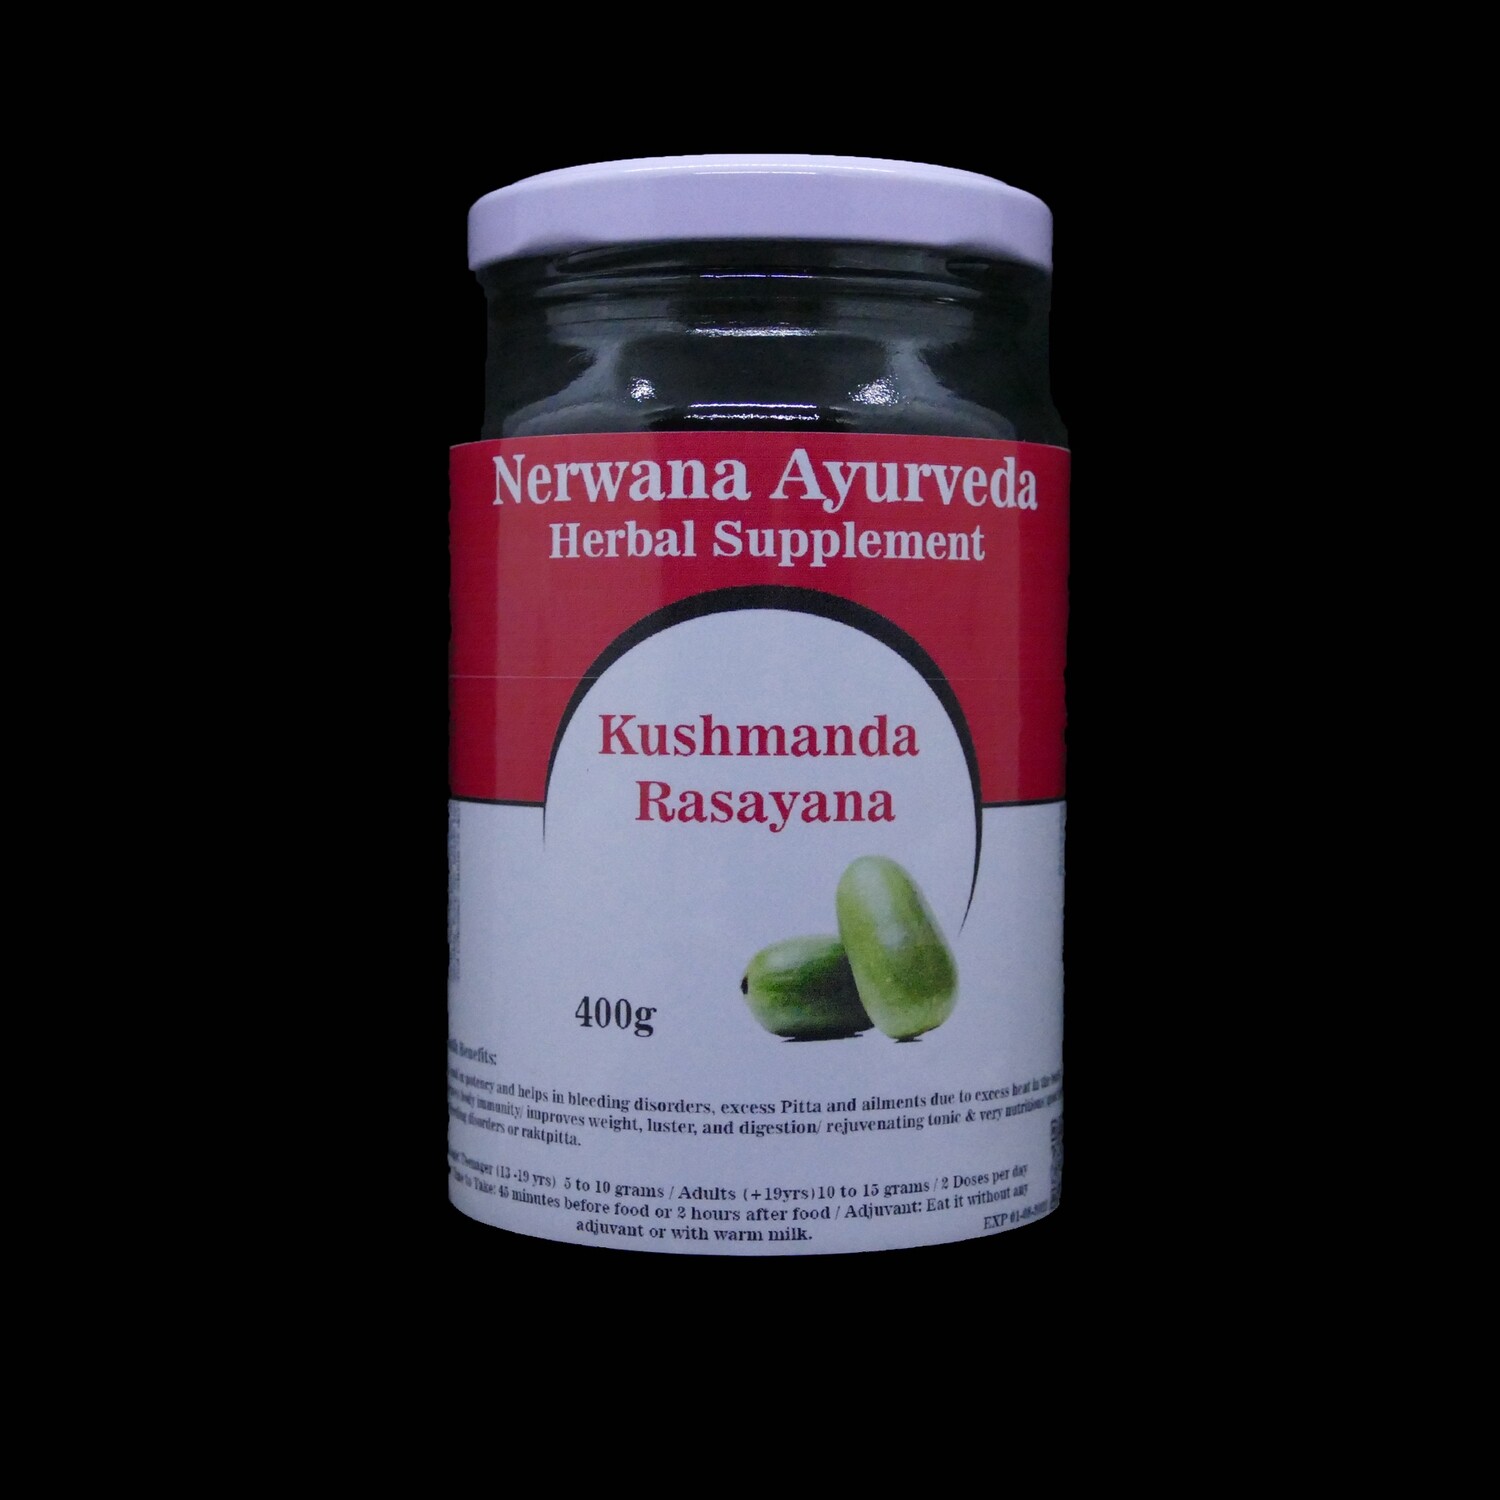 Kushmanda rasayana vermindering van pitta en vata